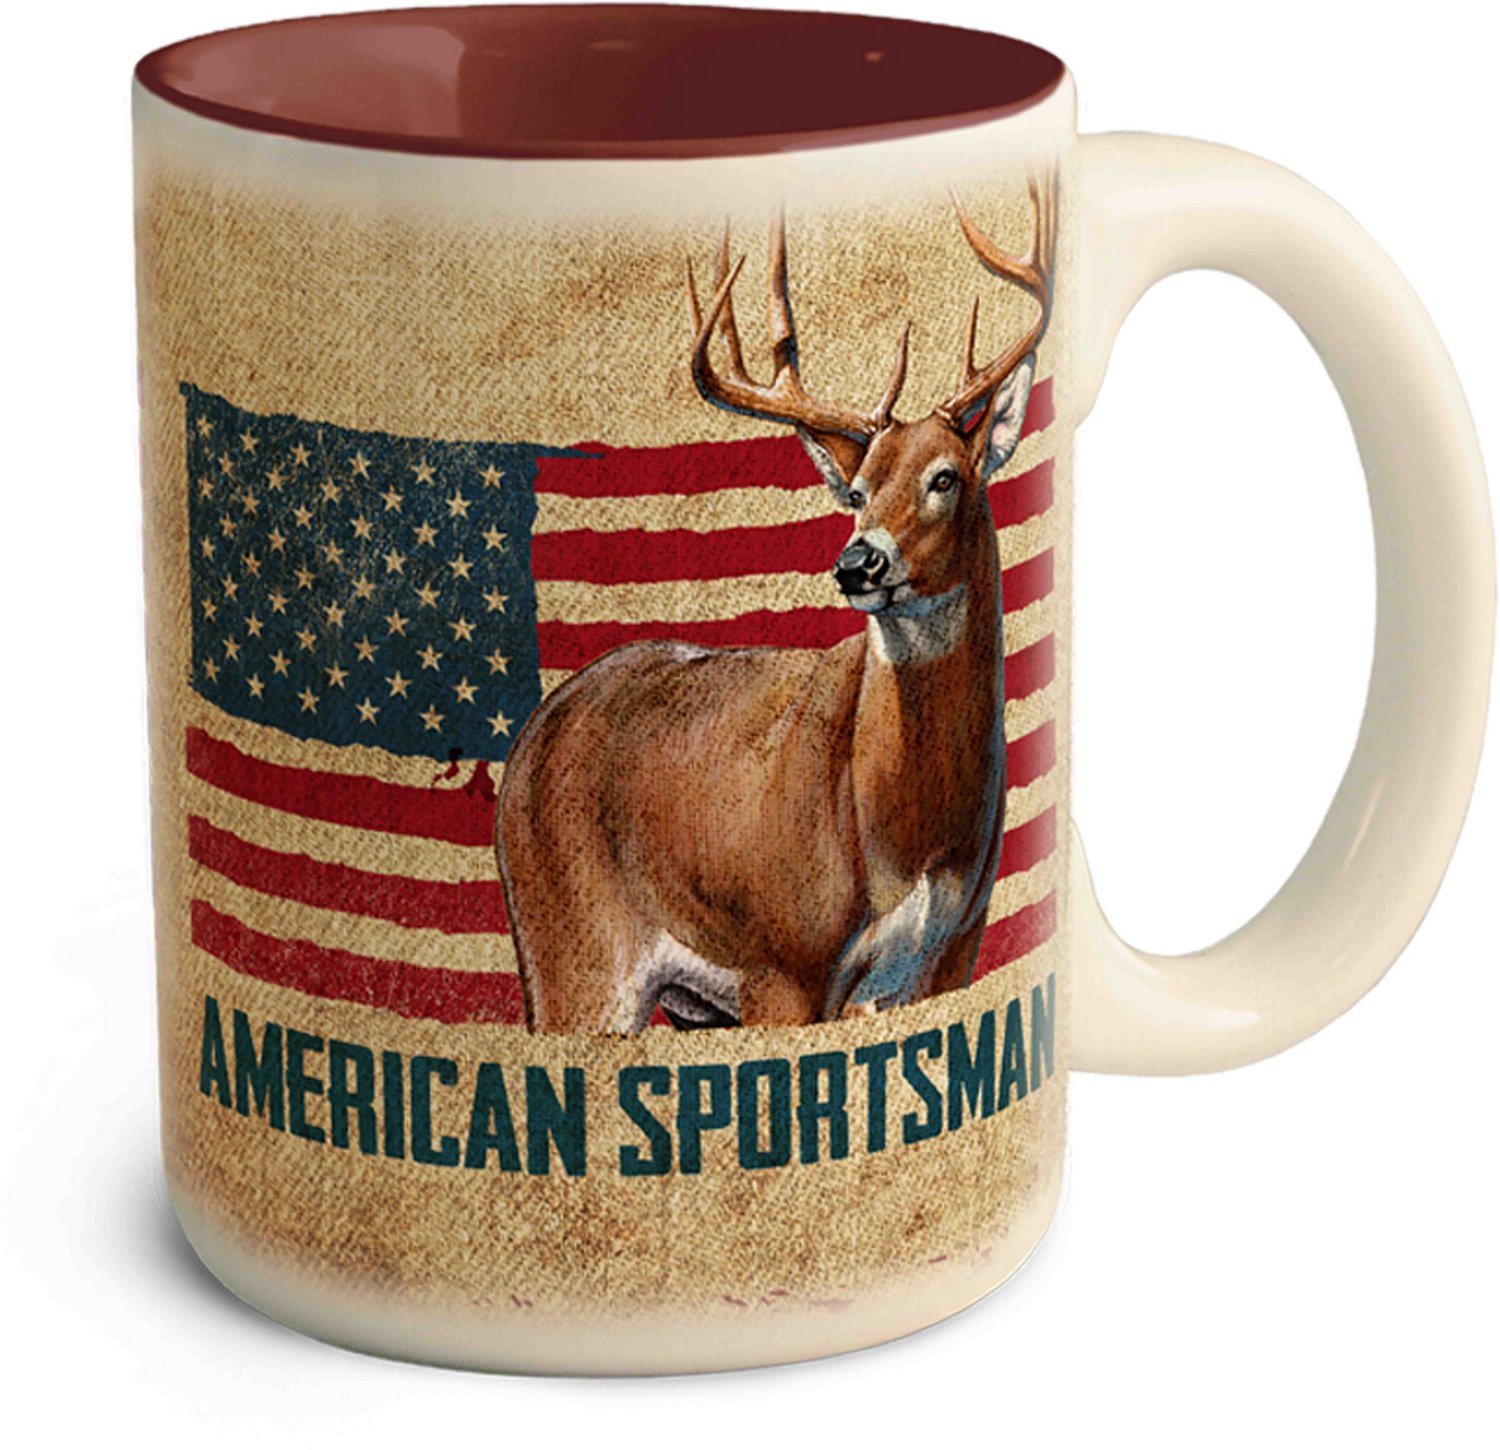 sportsman's warehouse travel mug